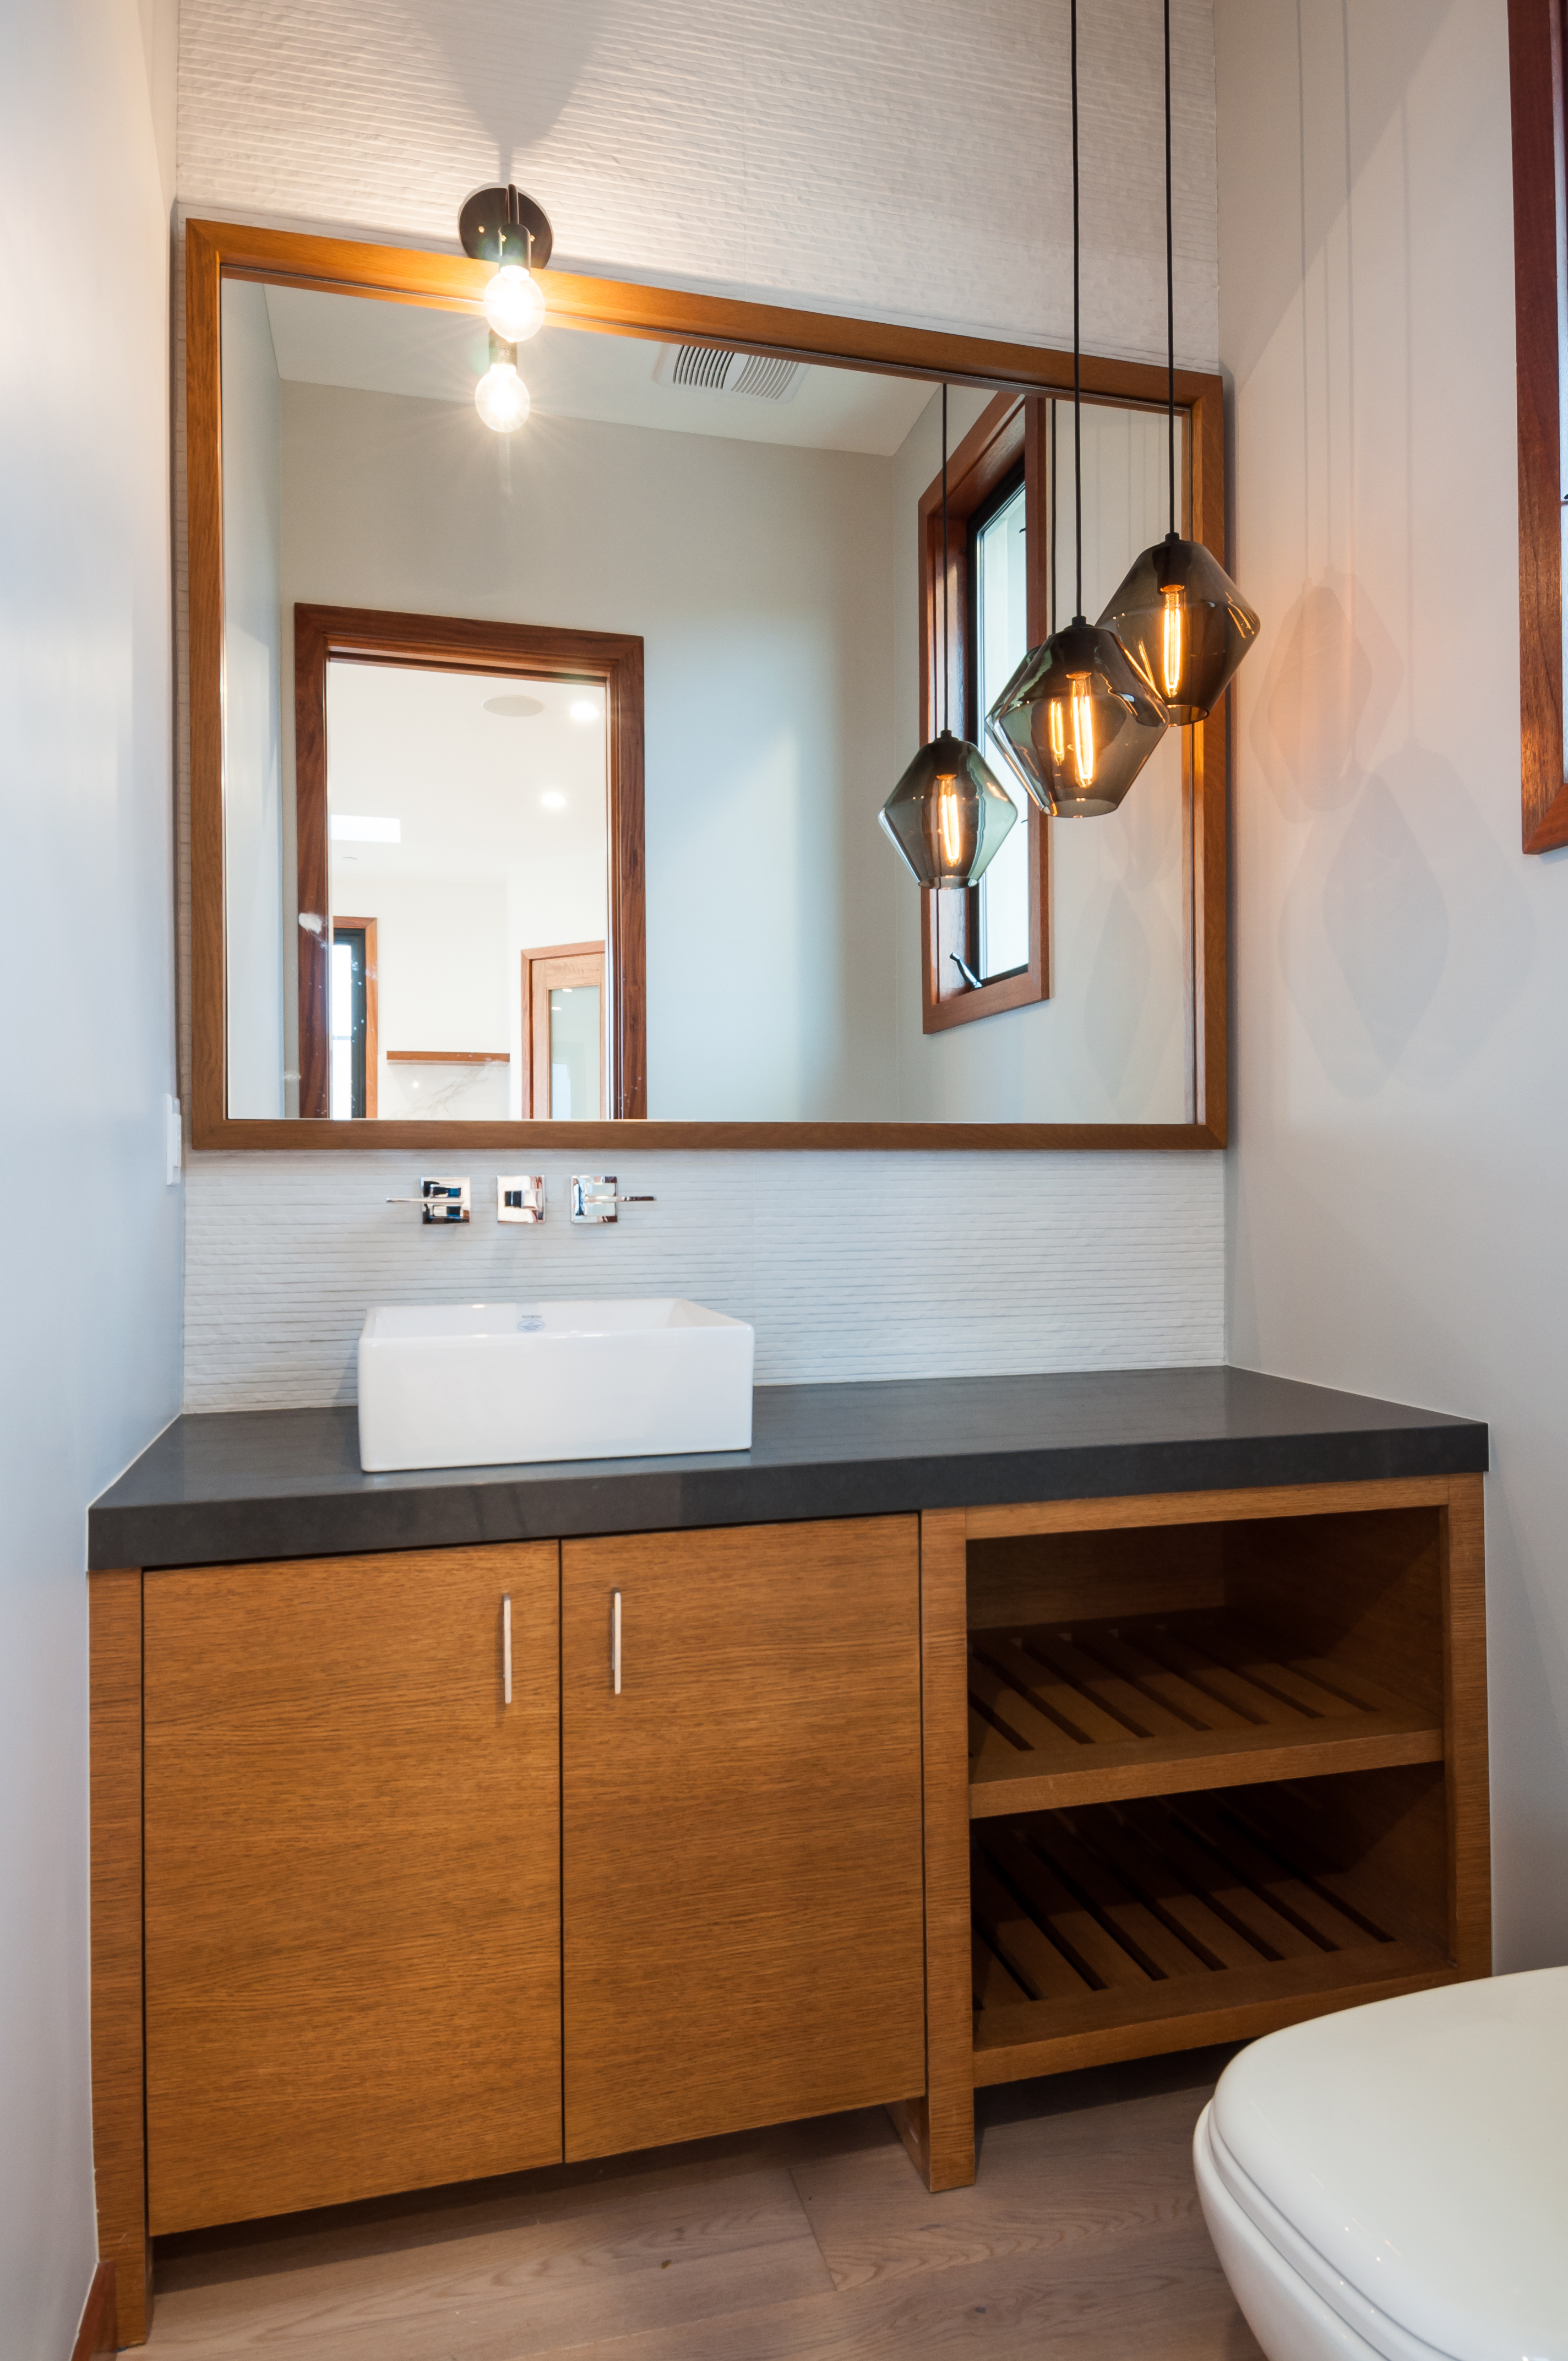 0054 – bathoom counter and mirror | Dunn Construction